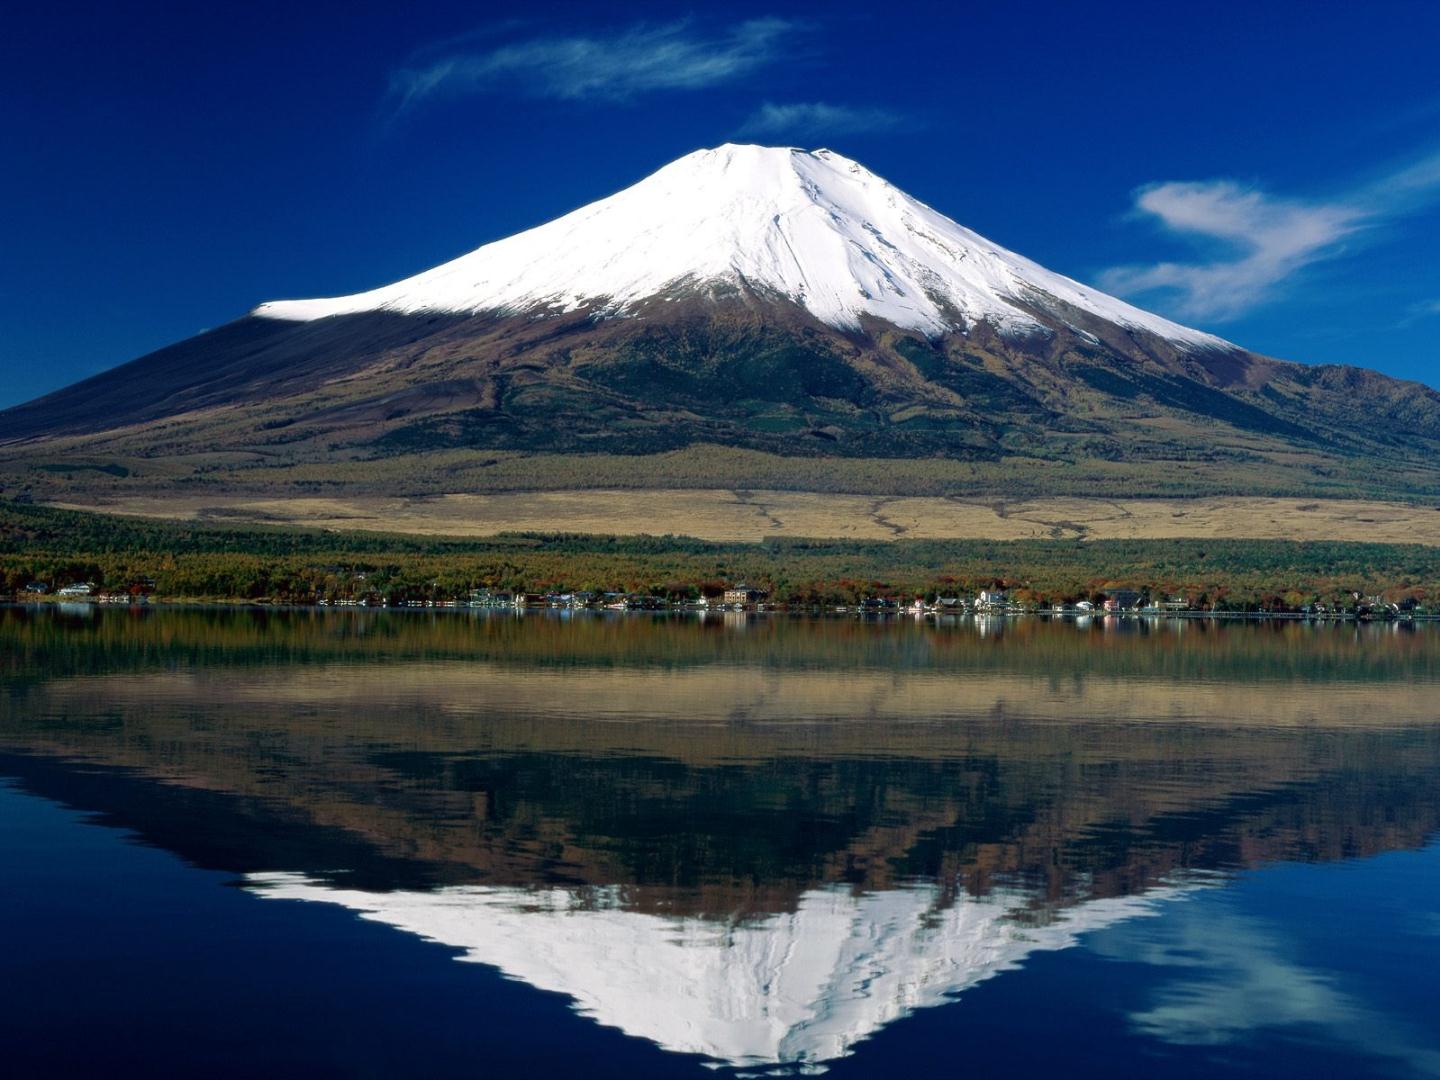 Mount Fuji Japan Wallpaper HD, Explore countries with us